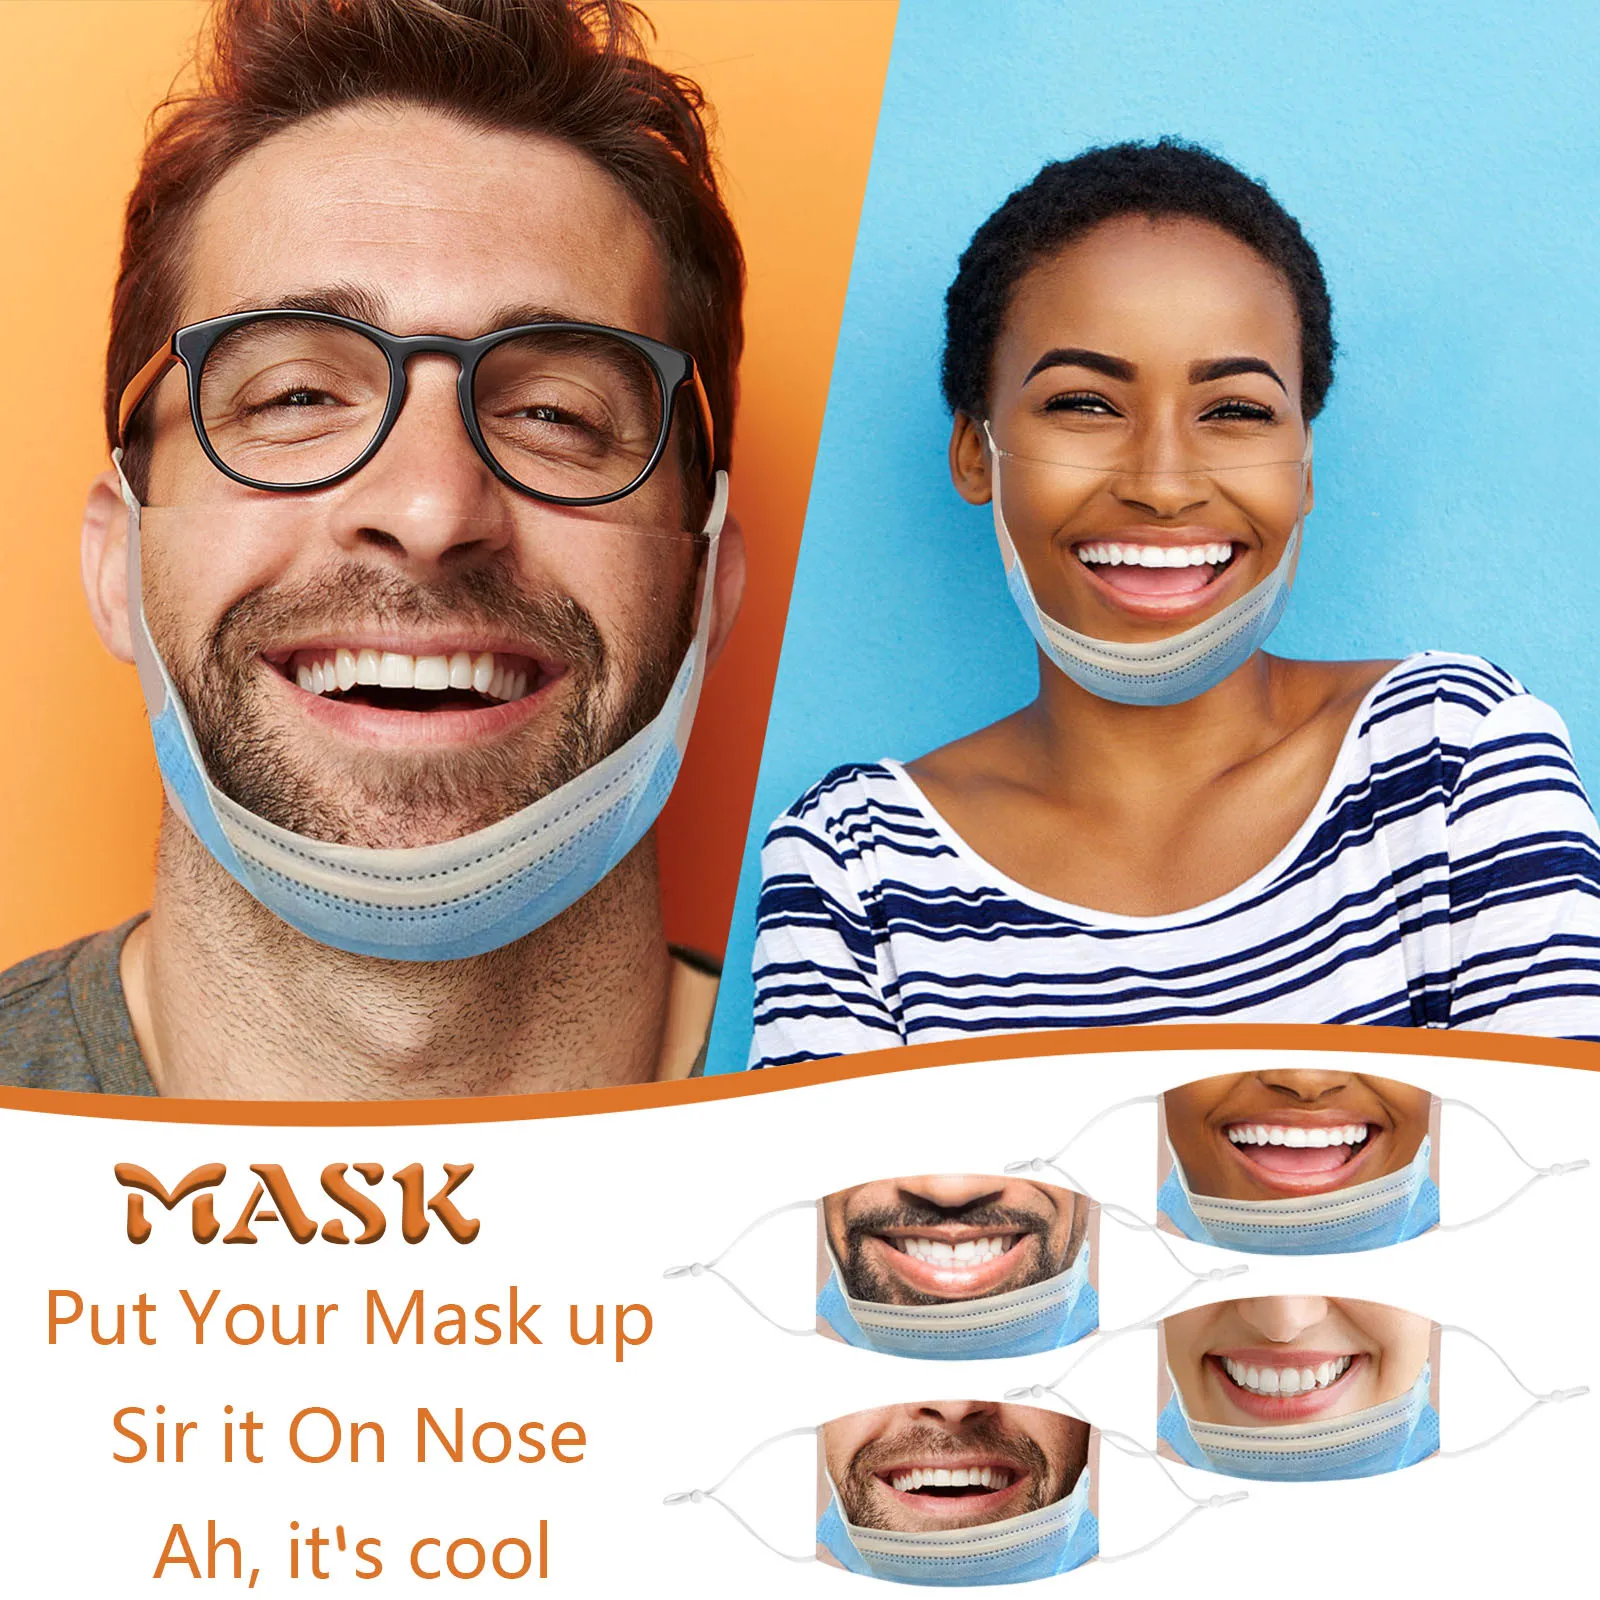 

Creativity Fun Mascarillas Adults Face Masque Spoof Funny Fashion Mask reusable facemask маска для лиа Halloween cosplay